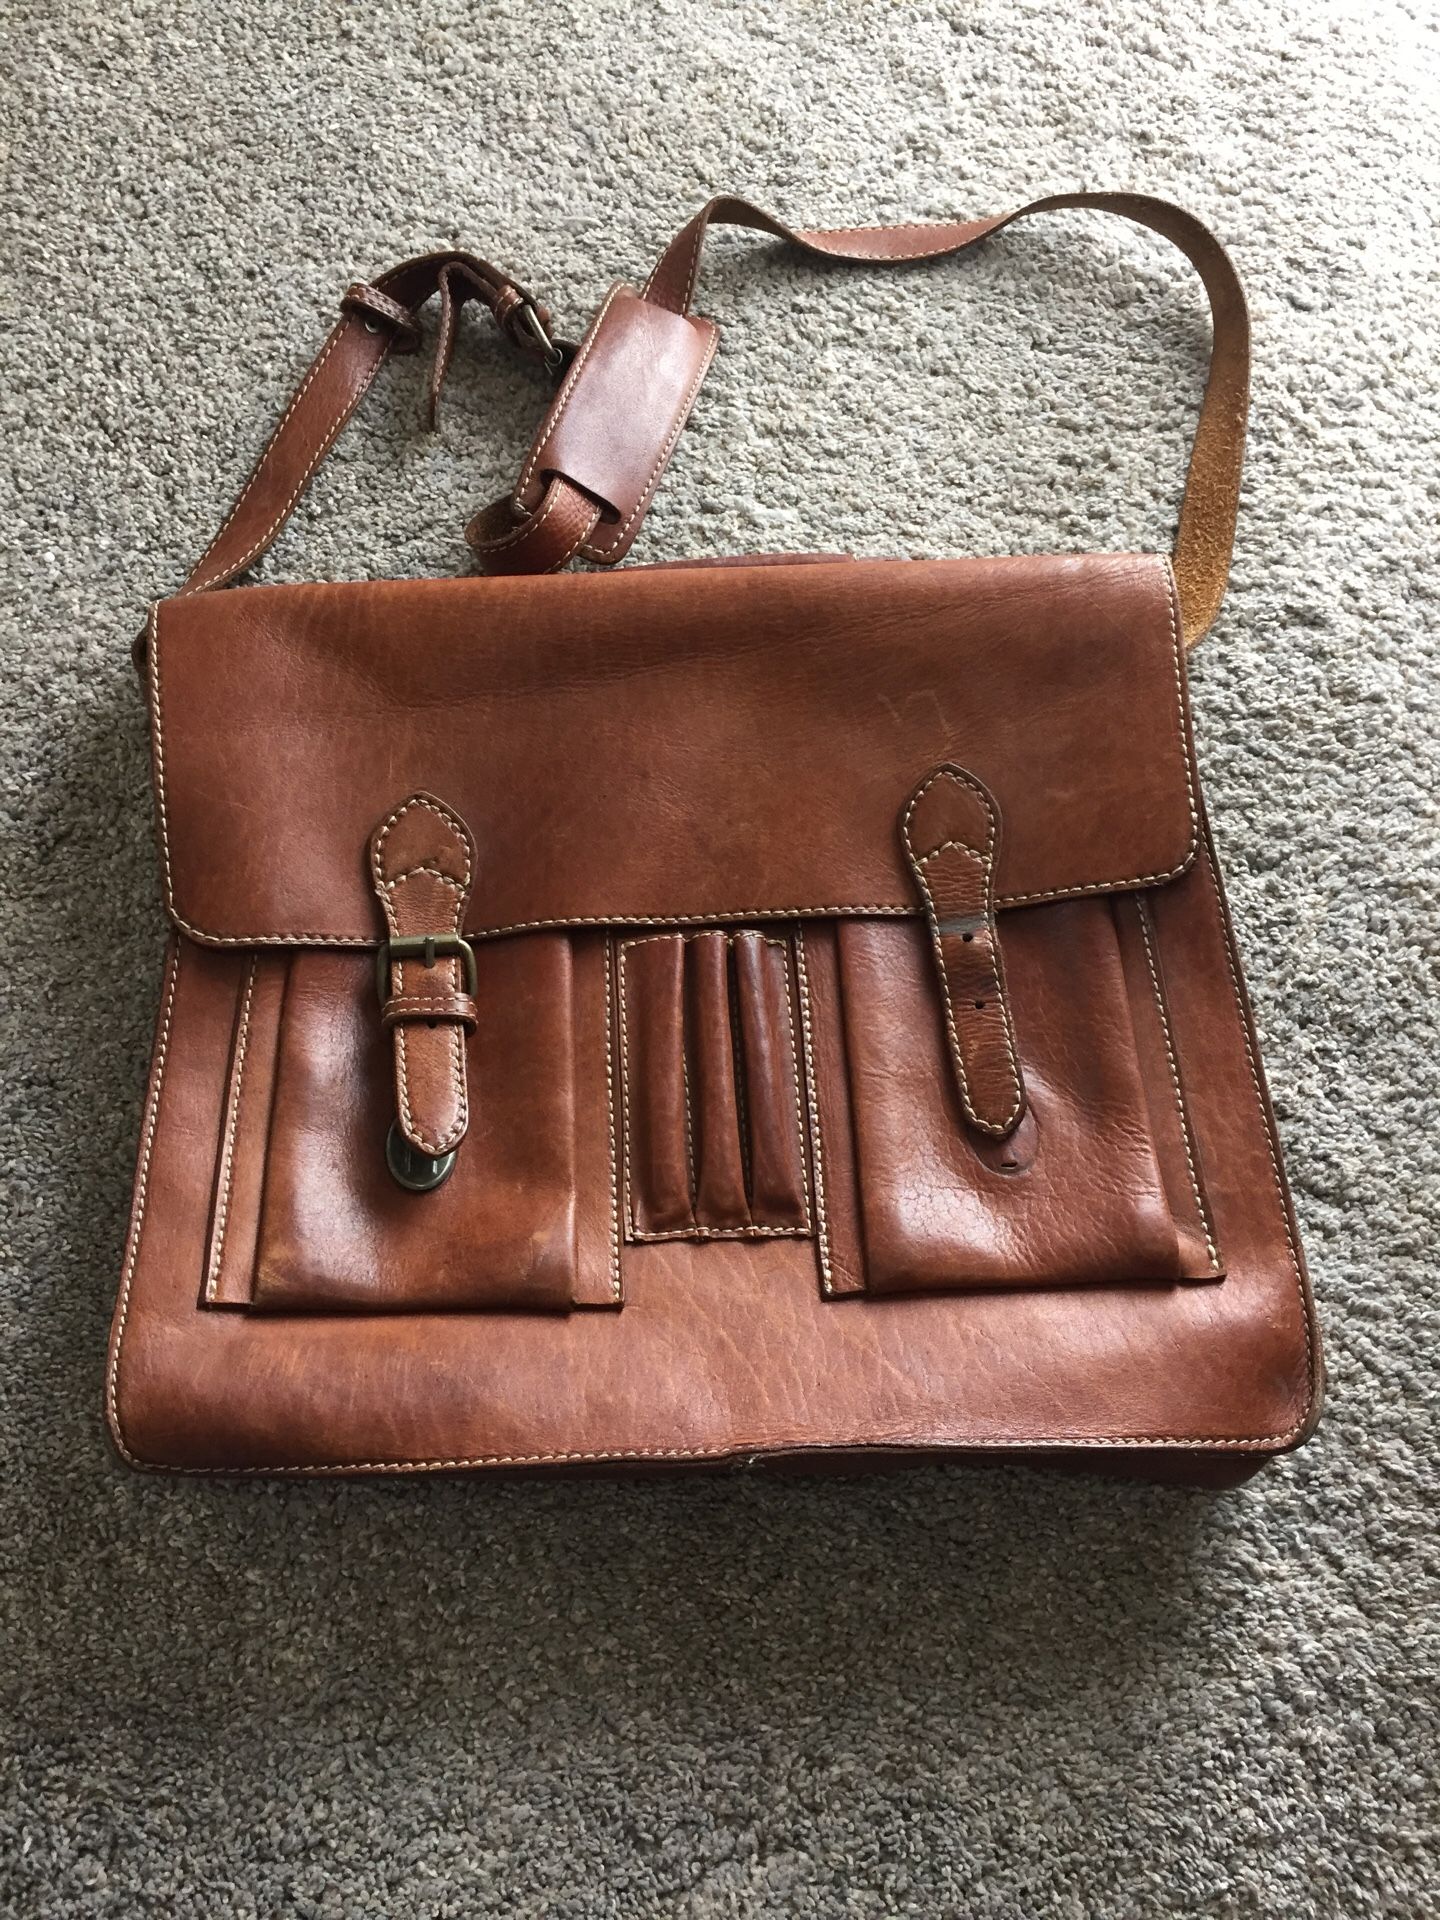 Leather messenger bag Colombian heavy cowhide purse